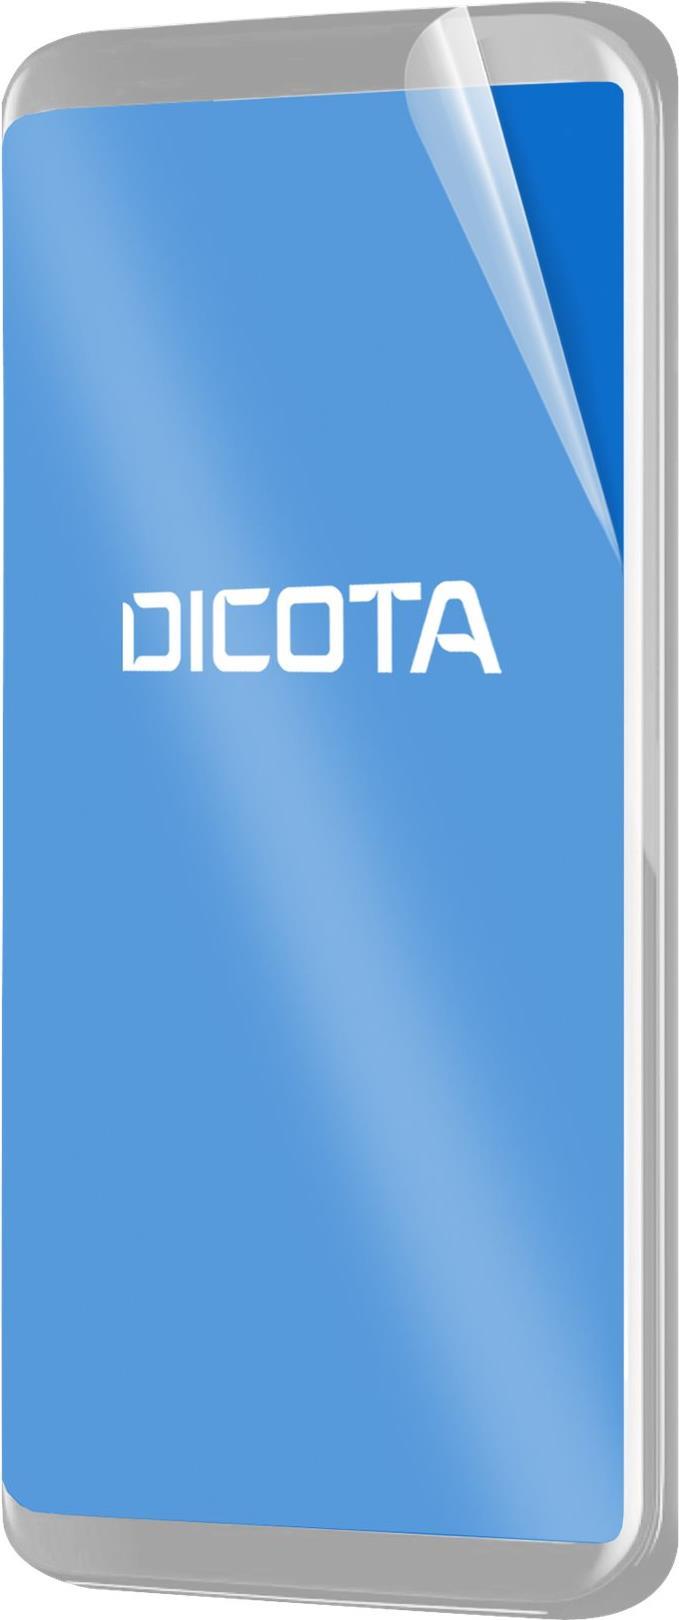 DICOTA Bildschirmschutz für Handy (D70351)